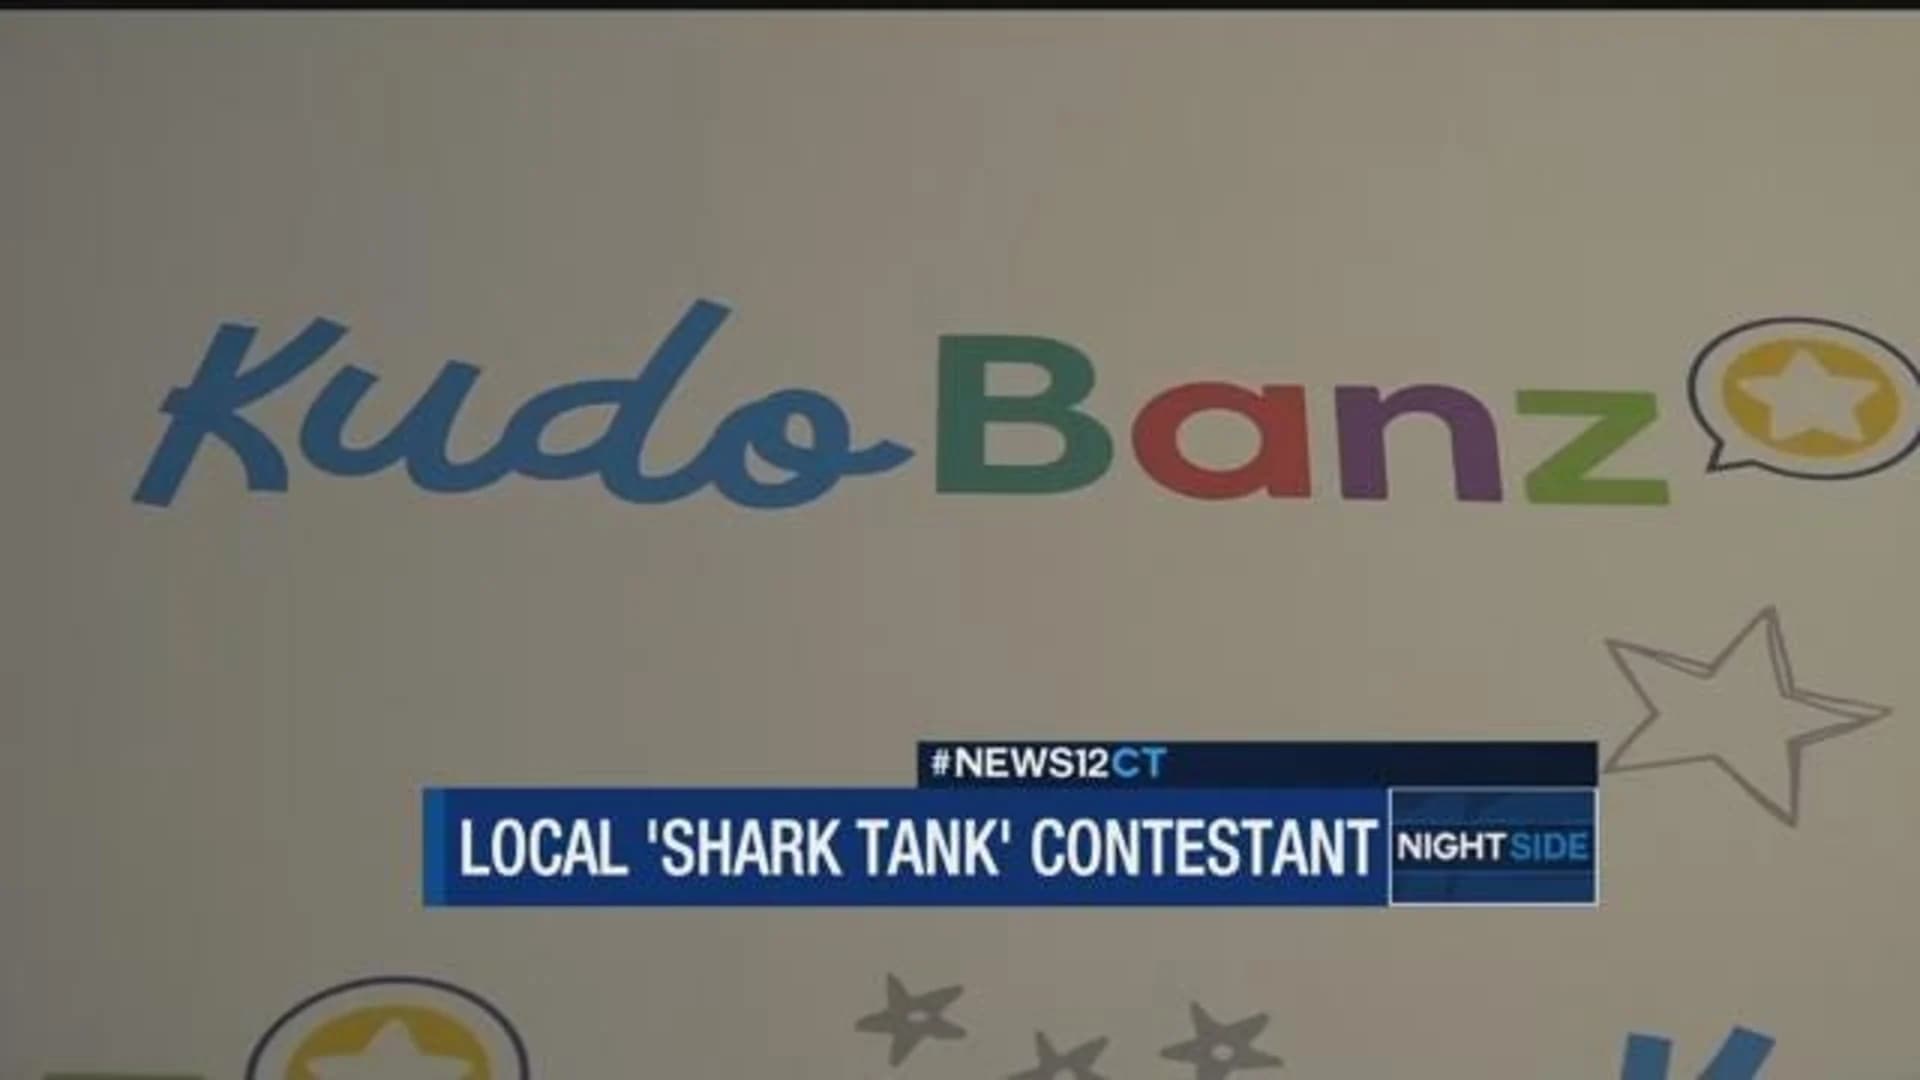 Shelton family ‘Kudo Banz’ product to appear on ‘Shark Tank’